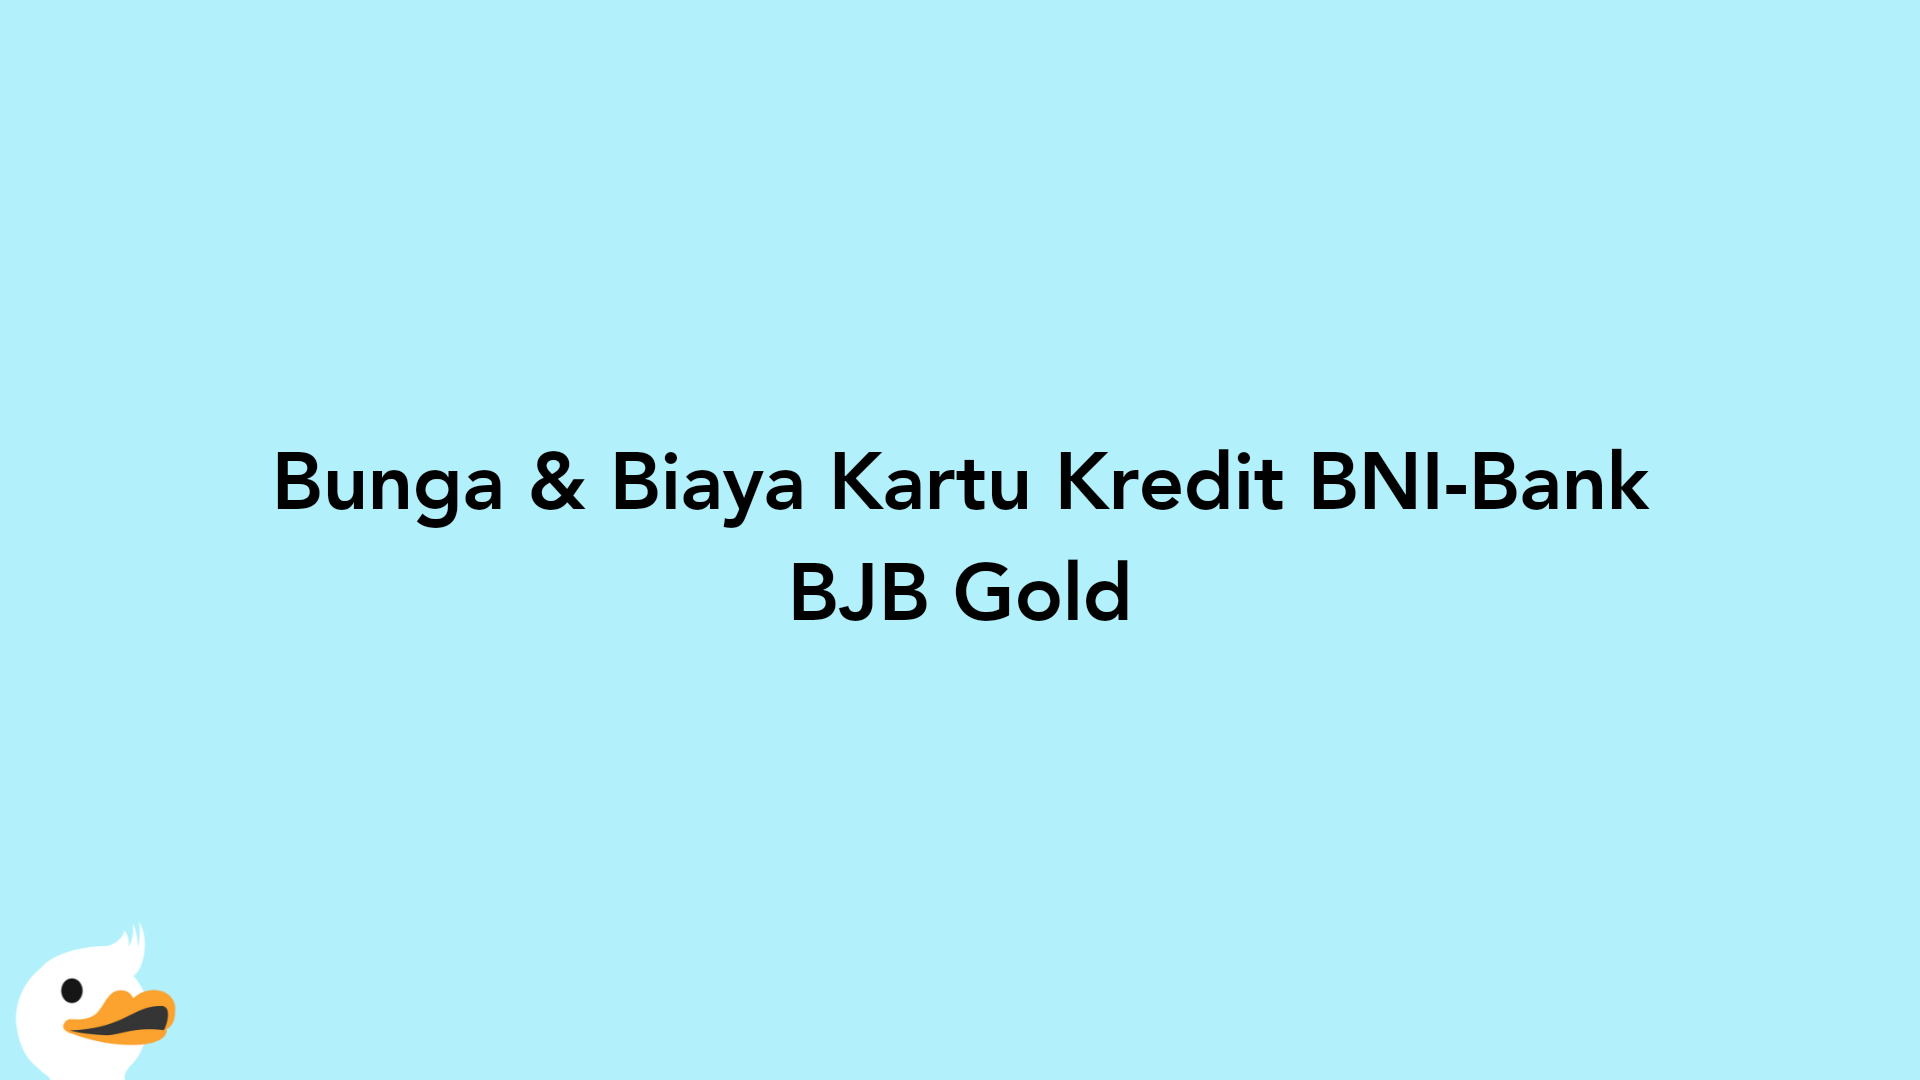 Bunga & Biaya Kartu Kredit BNI-Bank BJB Gold